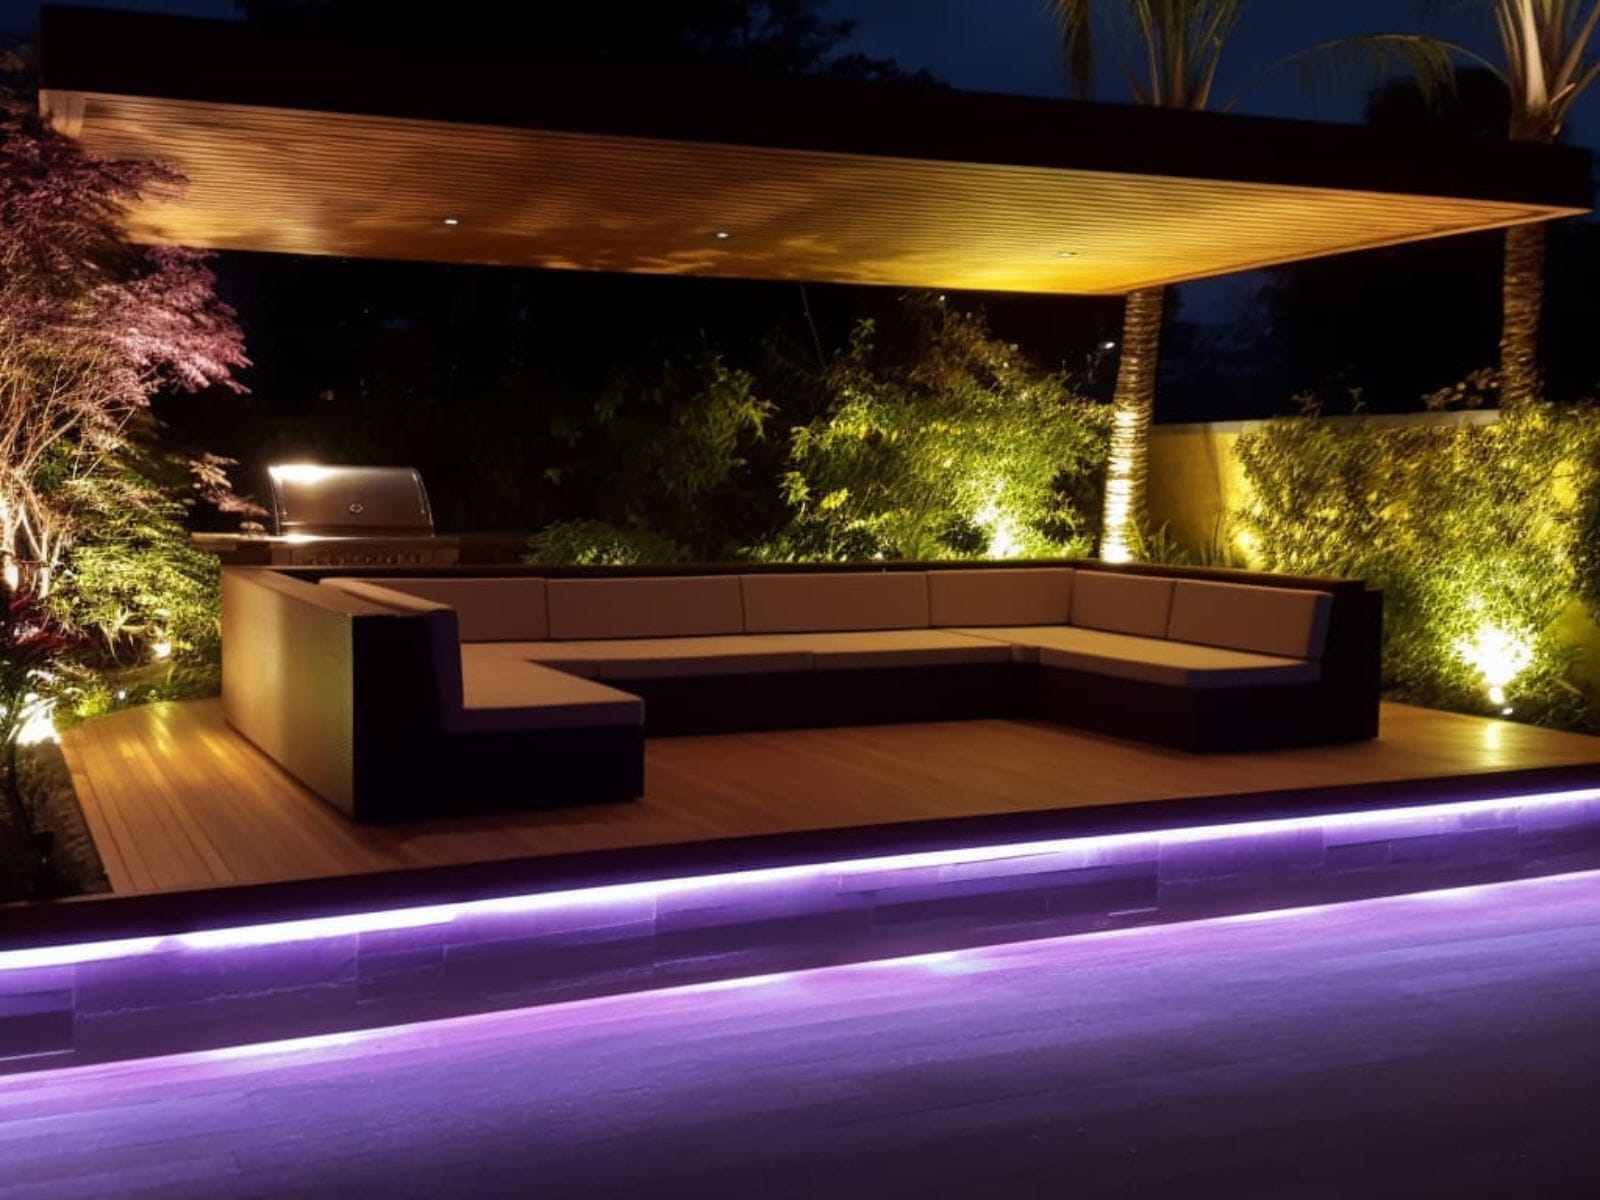 An LED strip light illuminating the perimeter of a backyard deck